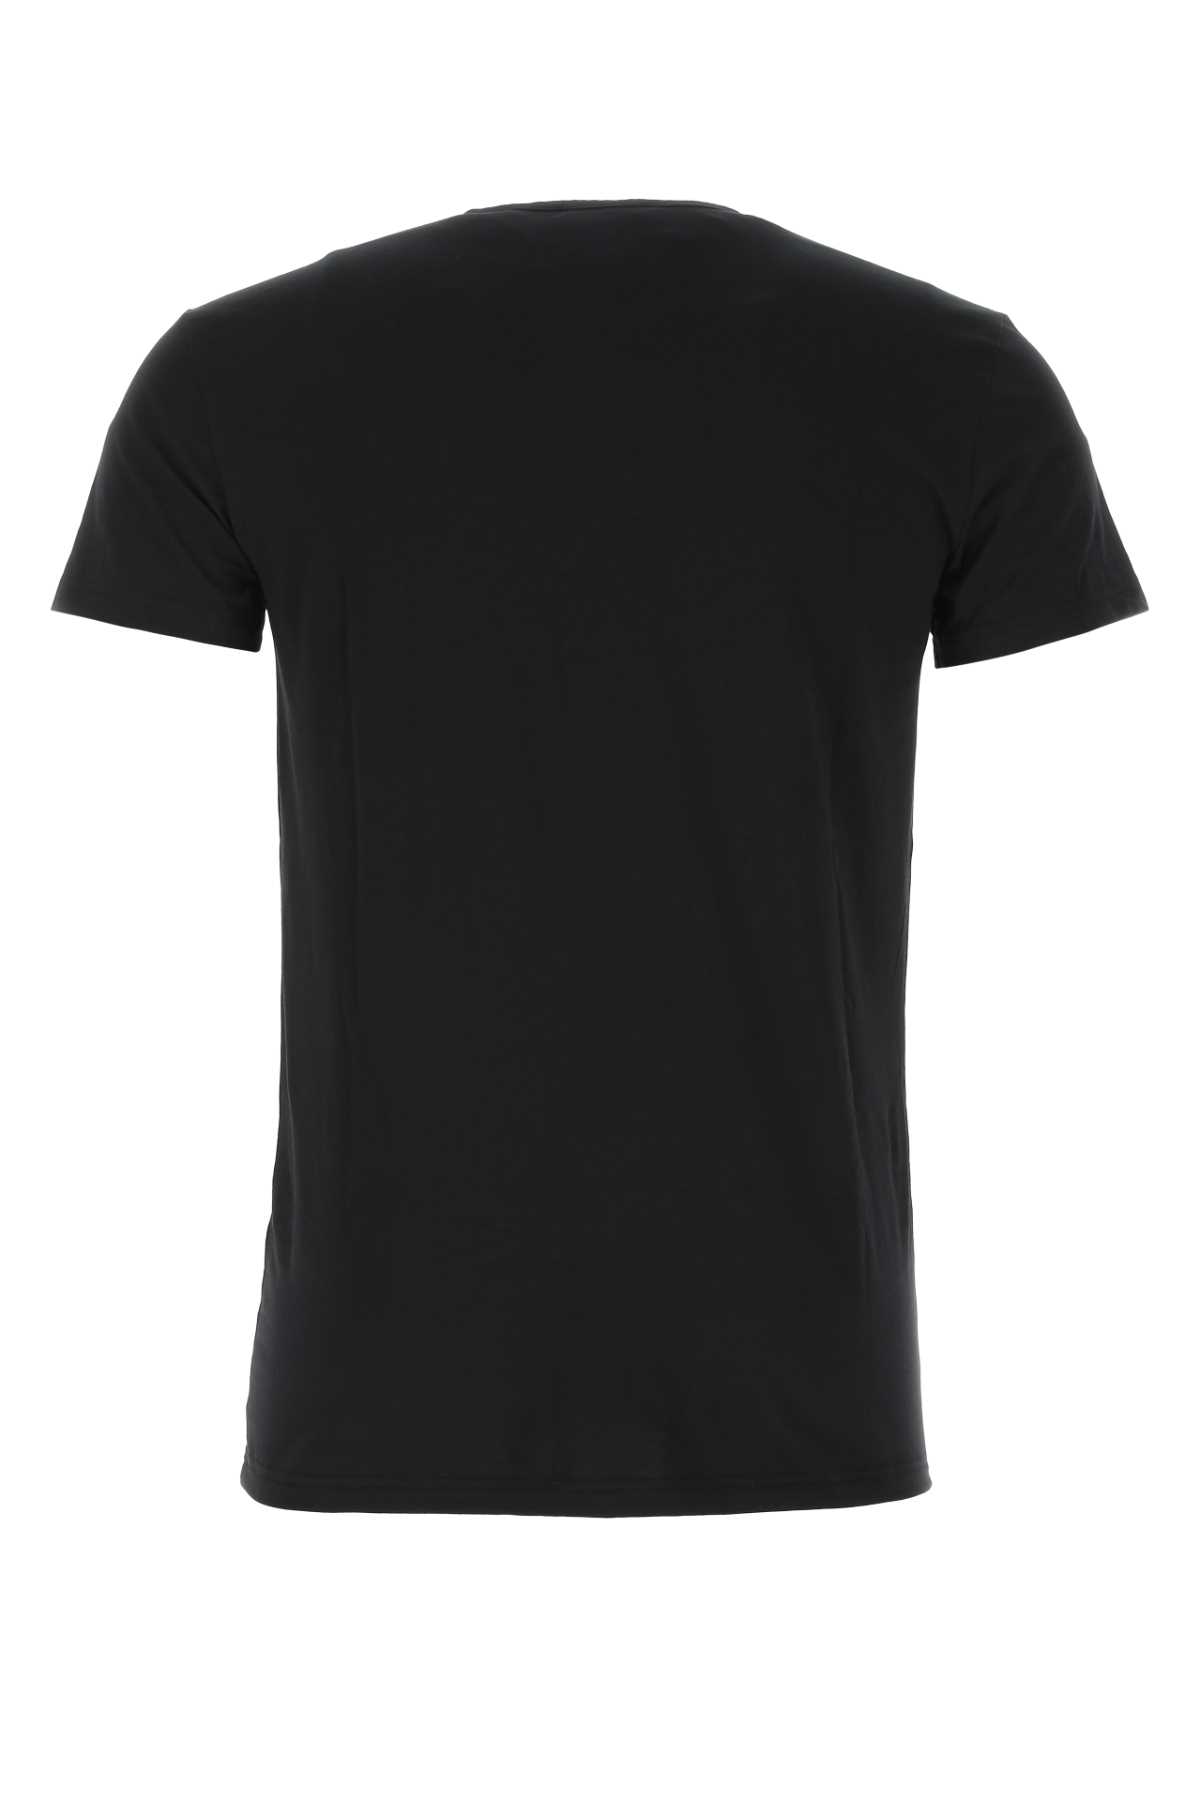 Versace Black Stretch Cotton T-shirt